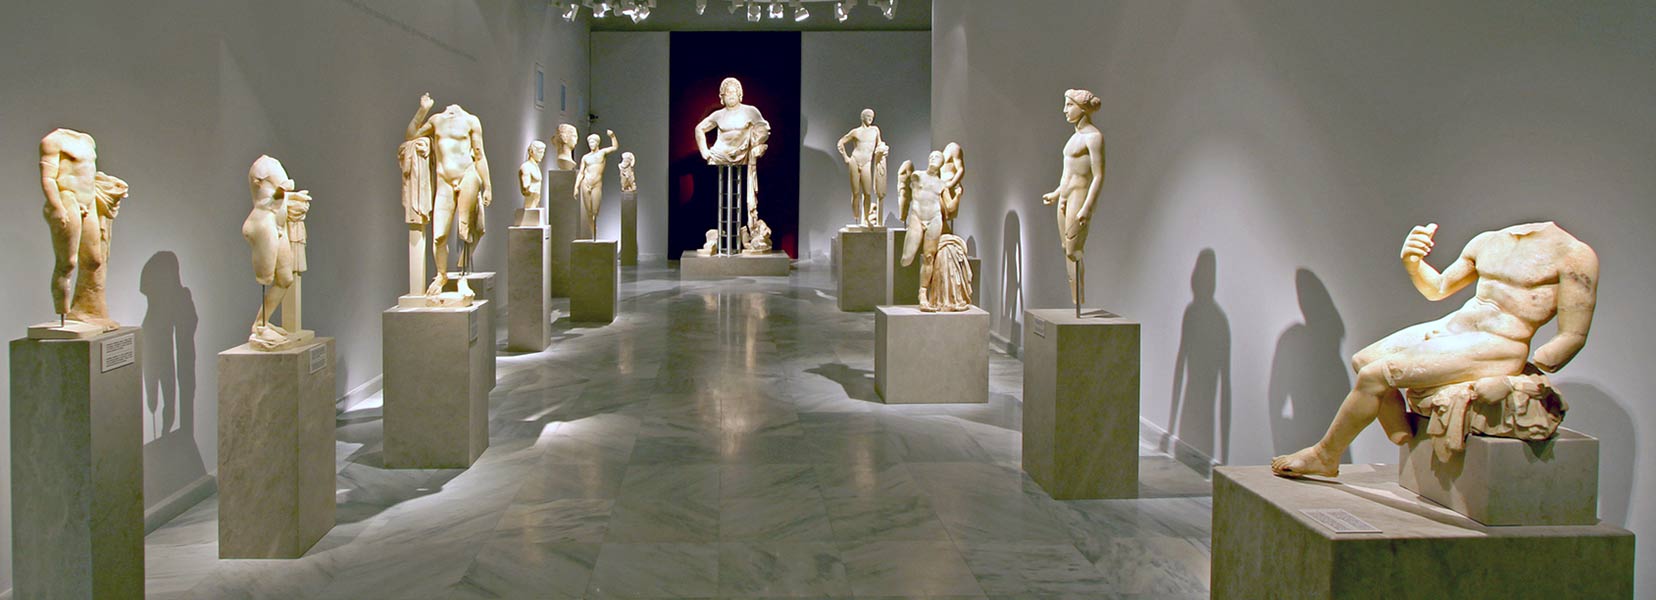 Kalymnos Archaeologisches Museum 0003